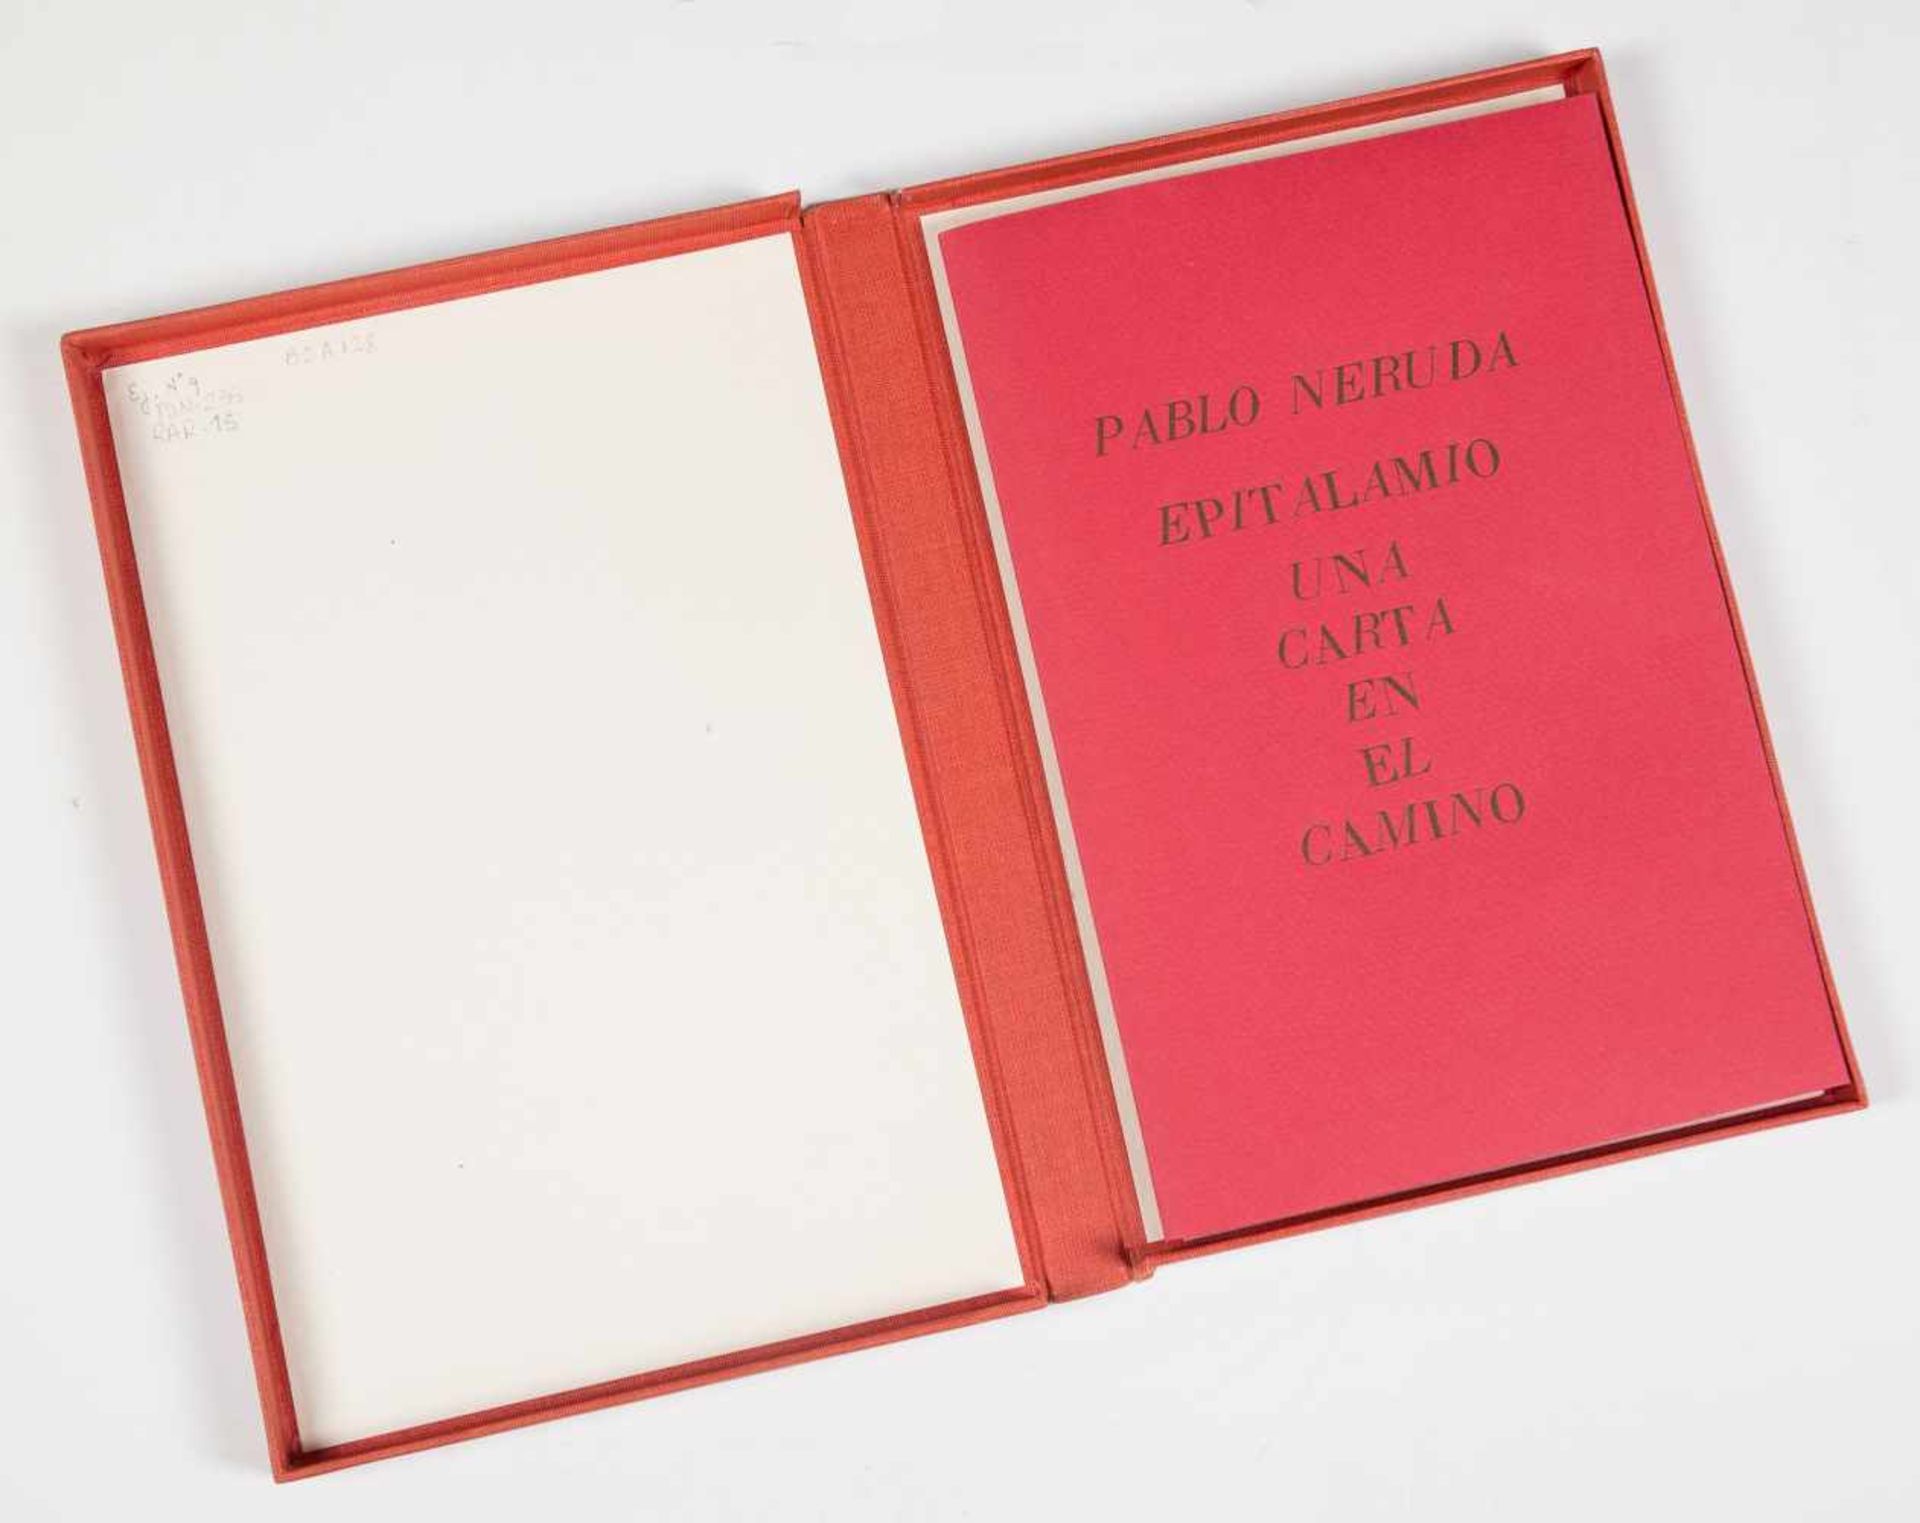 Epitalamio: una carta en el camino. (Epithalamium : a letter on the path) 1st edition, Buenos Aires: